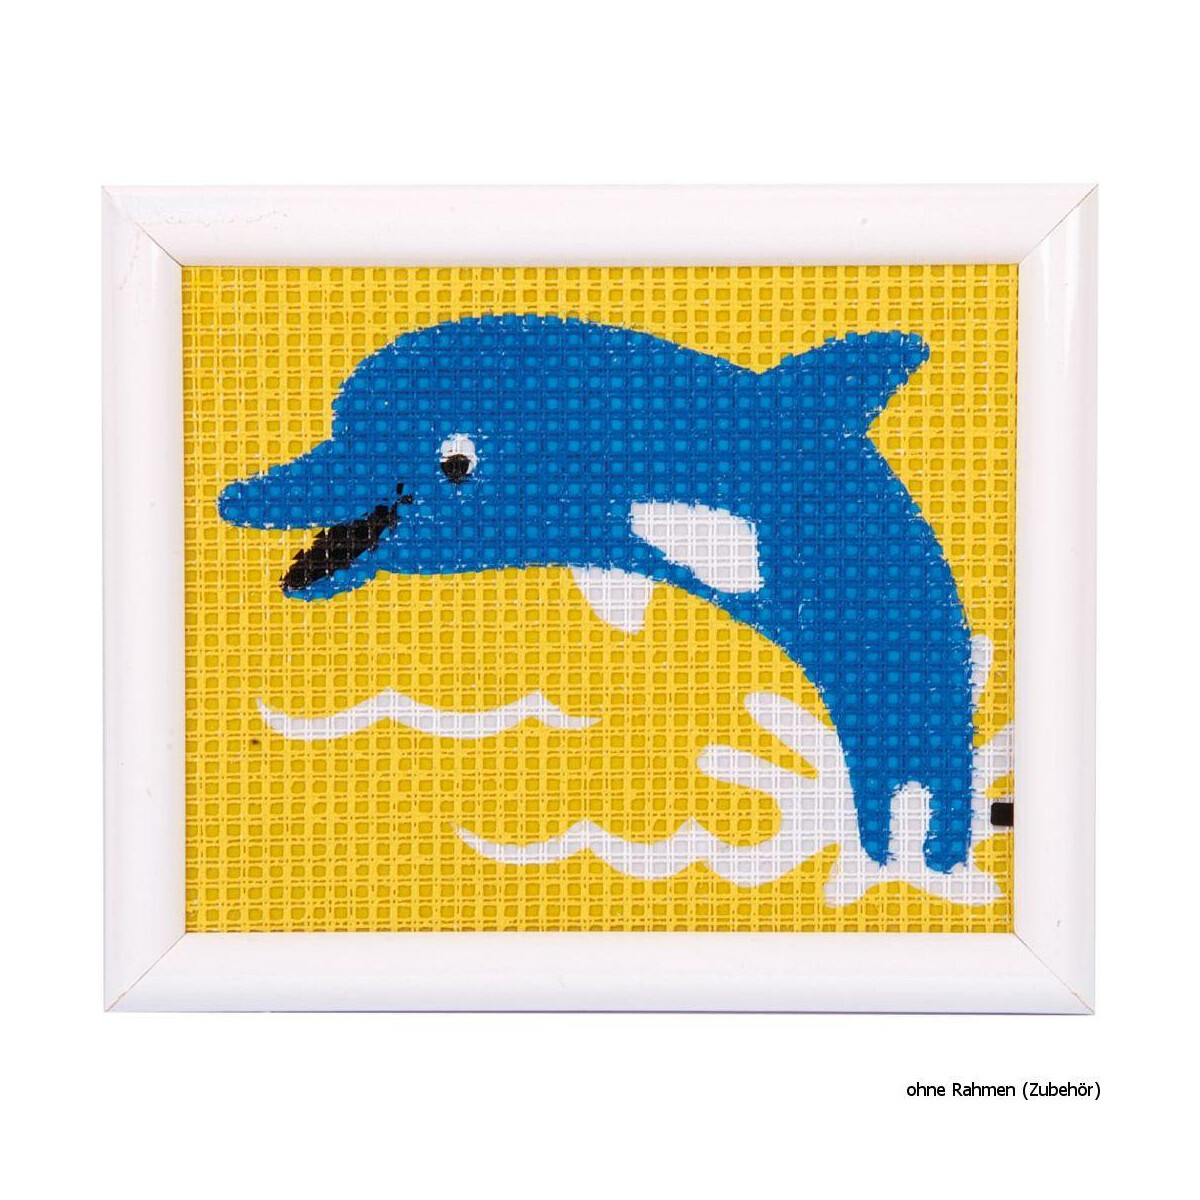 Vervaco stitch kit Dolphin, stamped, DIY